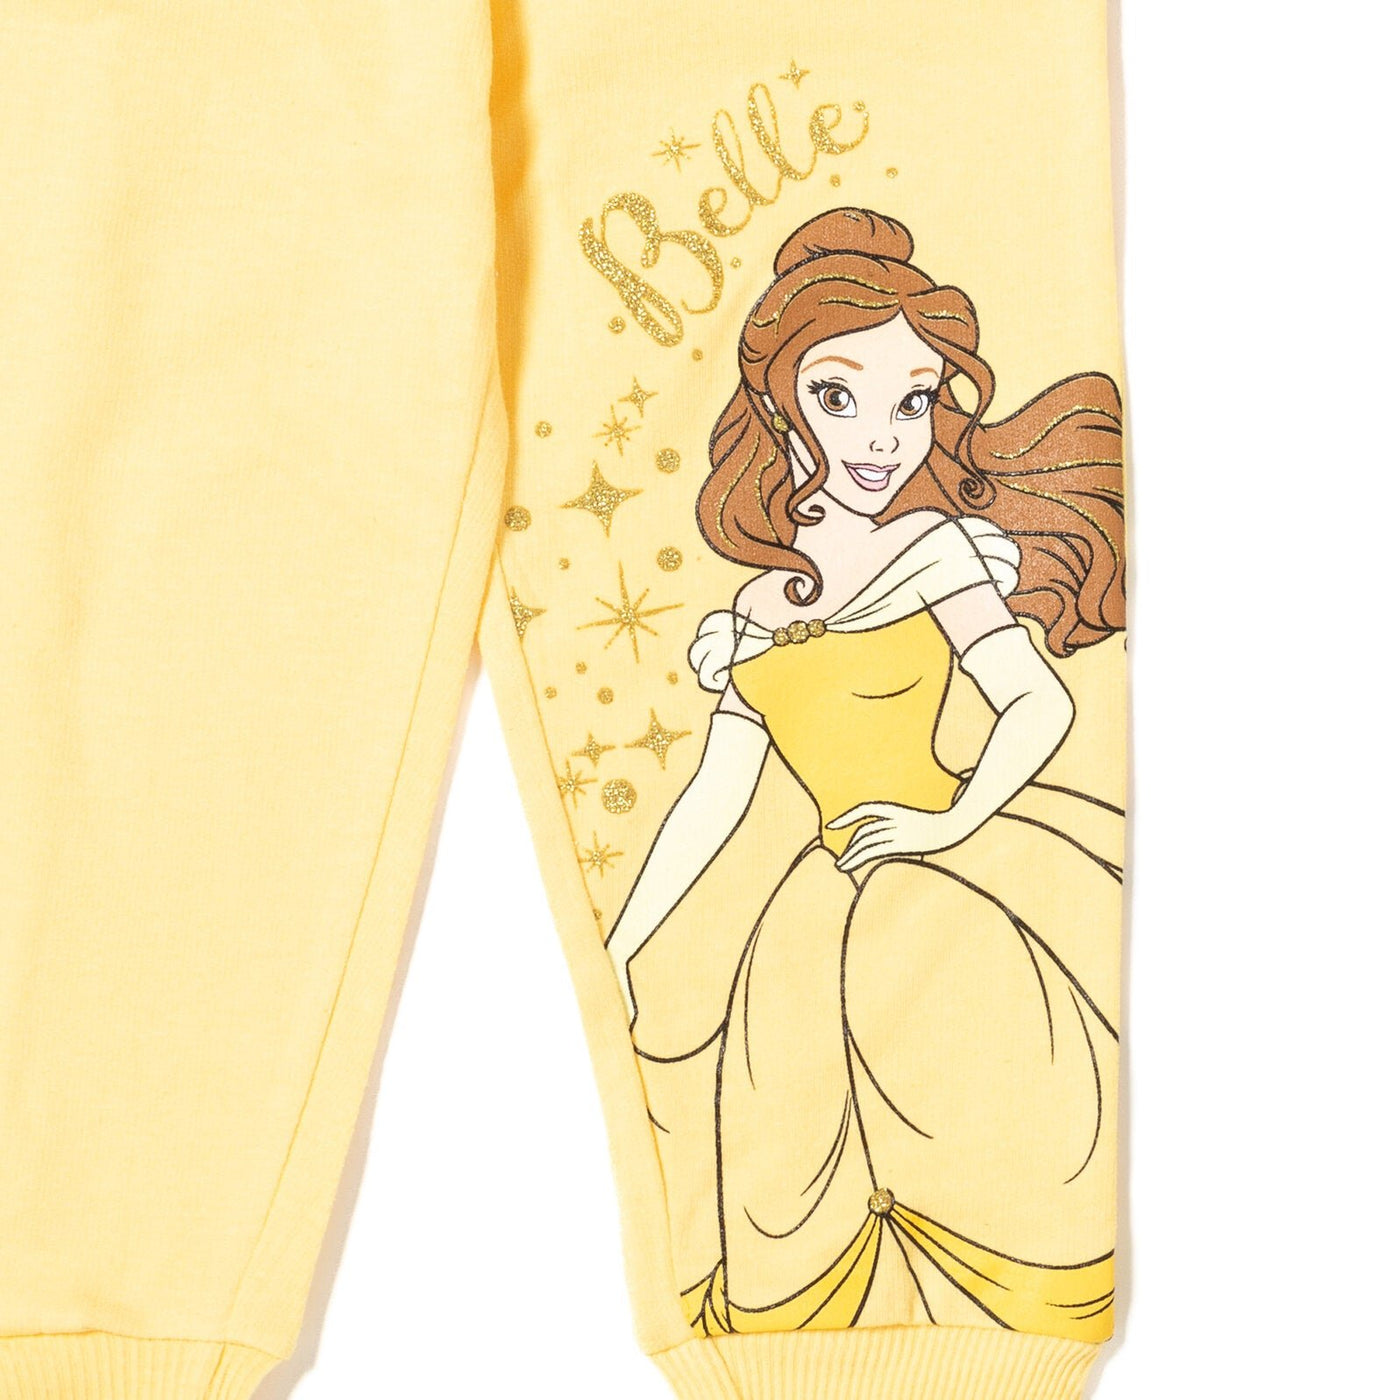 Disney Princess Belle 2 Pack Pants - imagikids